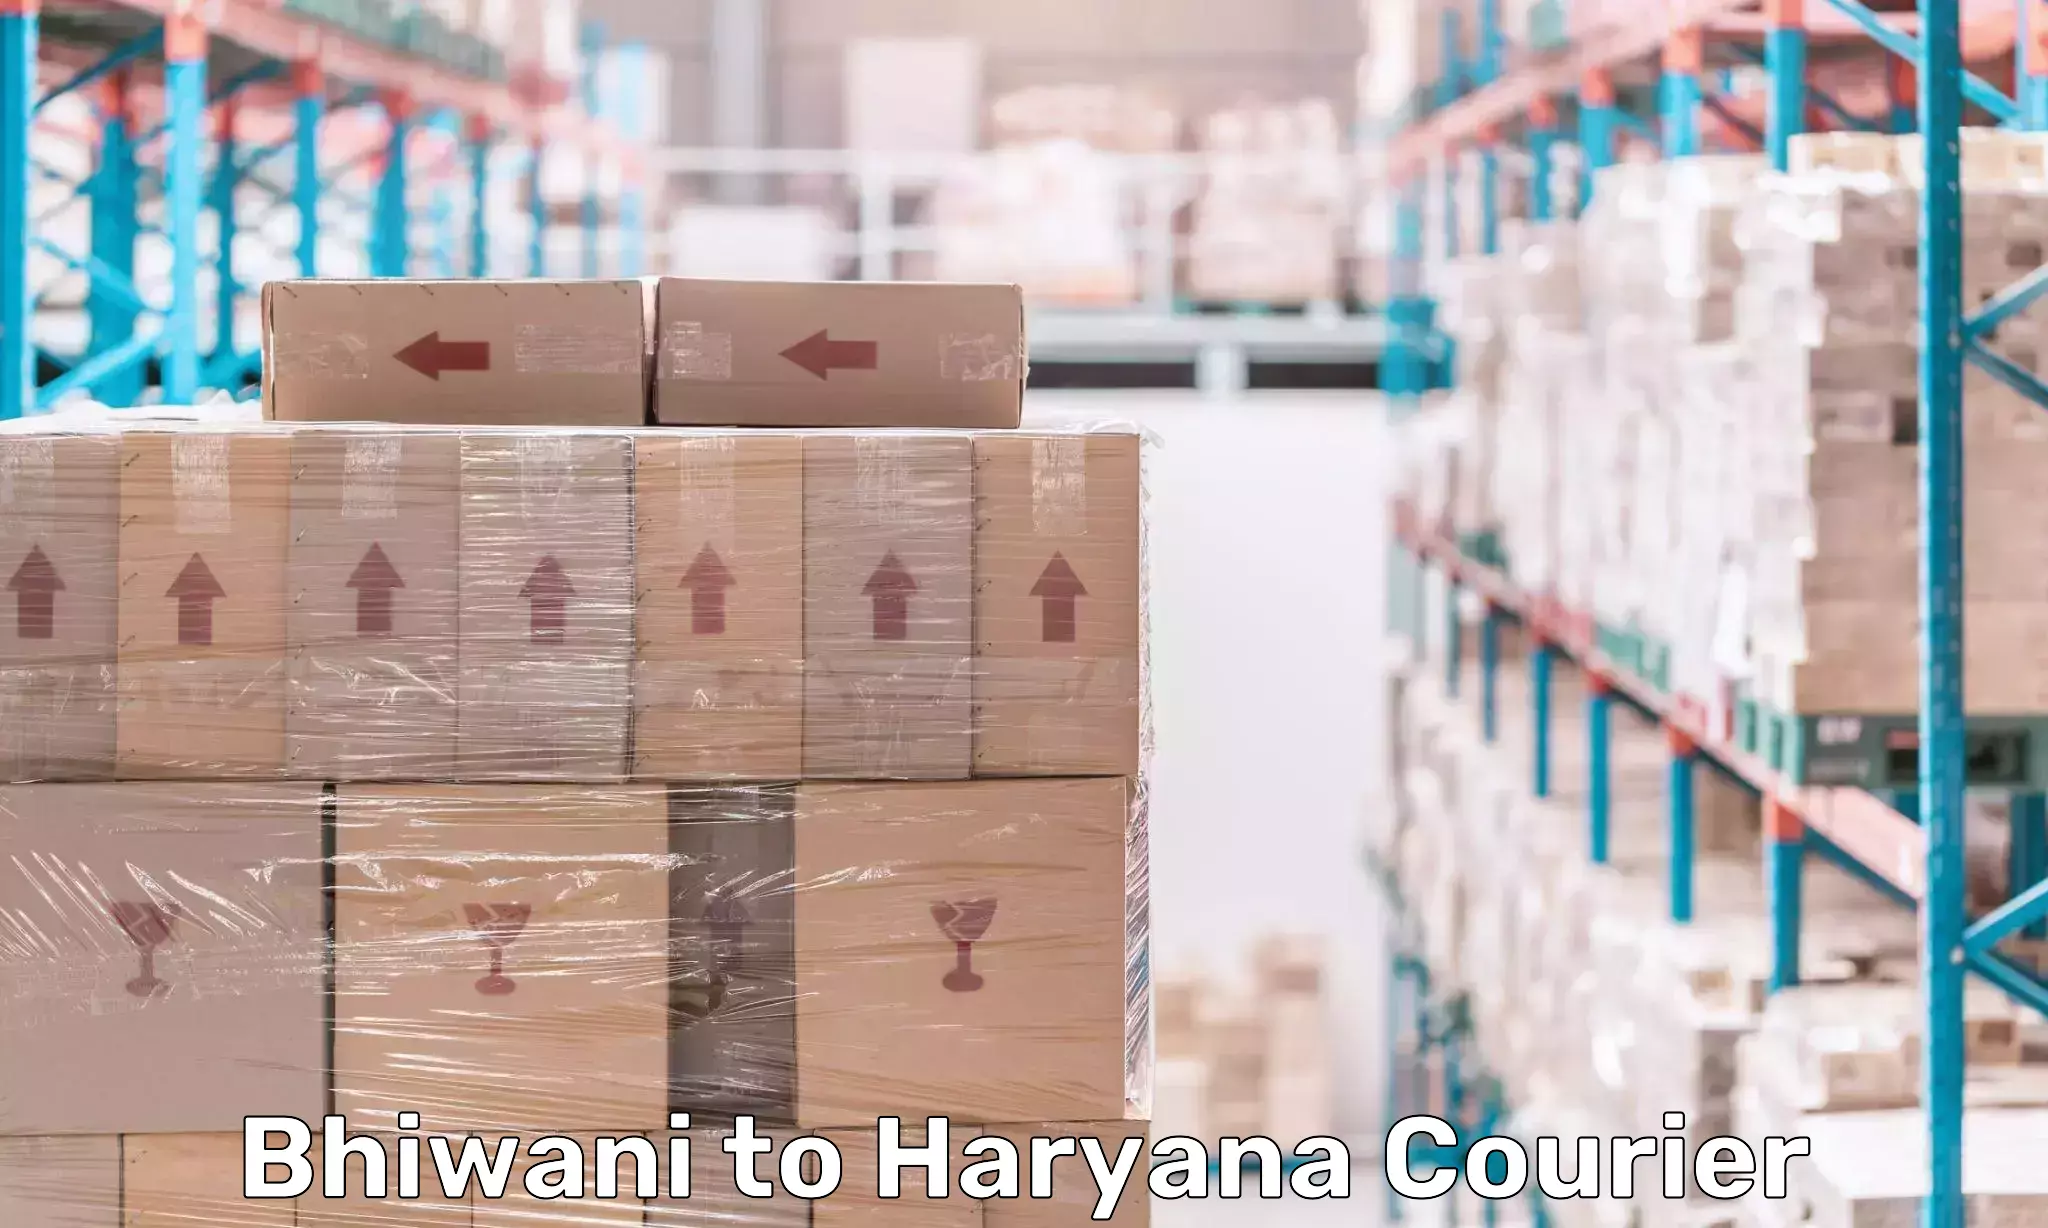 Global logistics network Bhiwani to Haryana